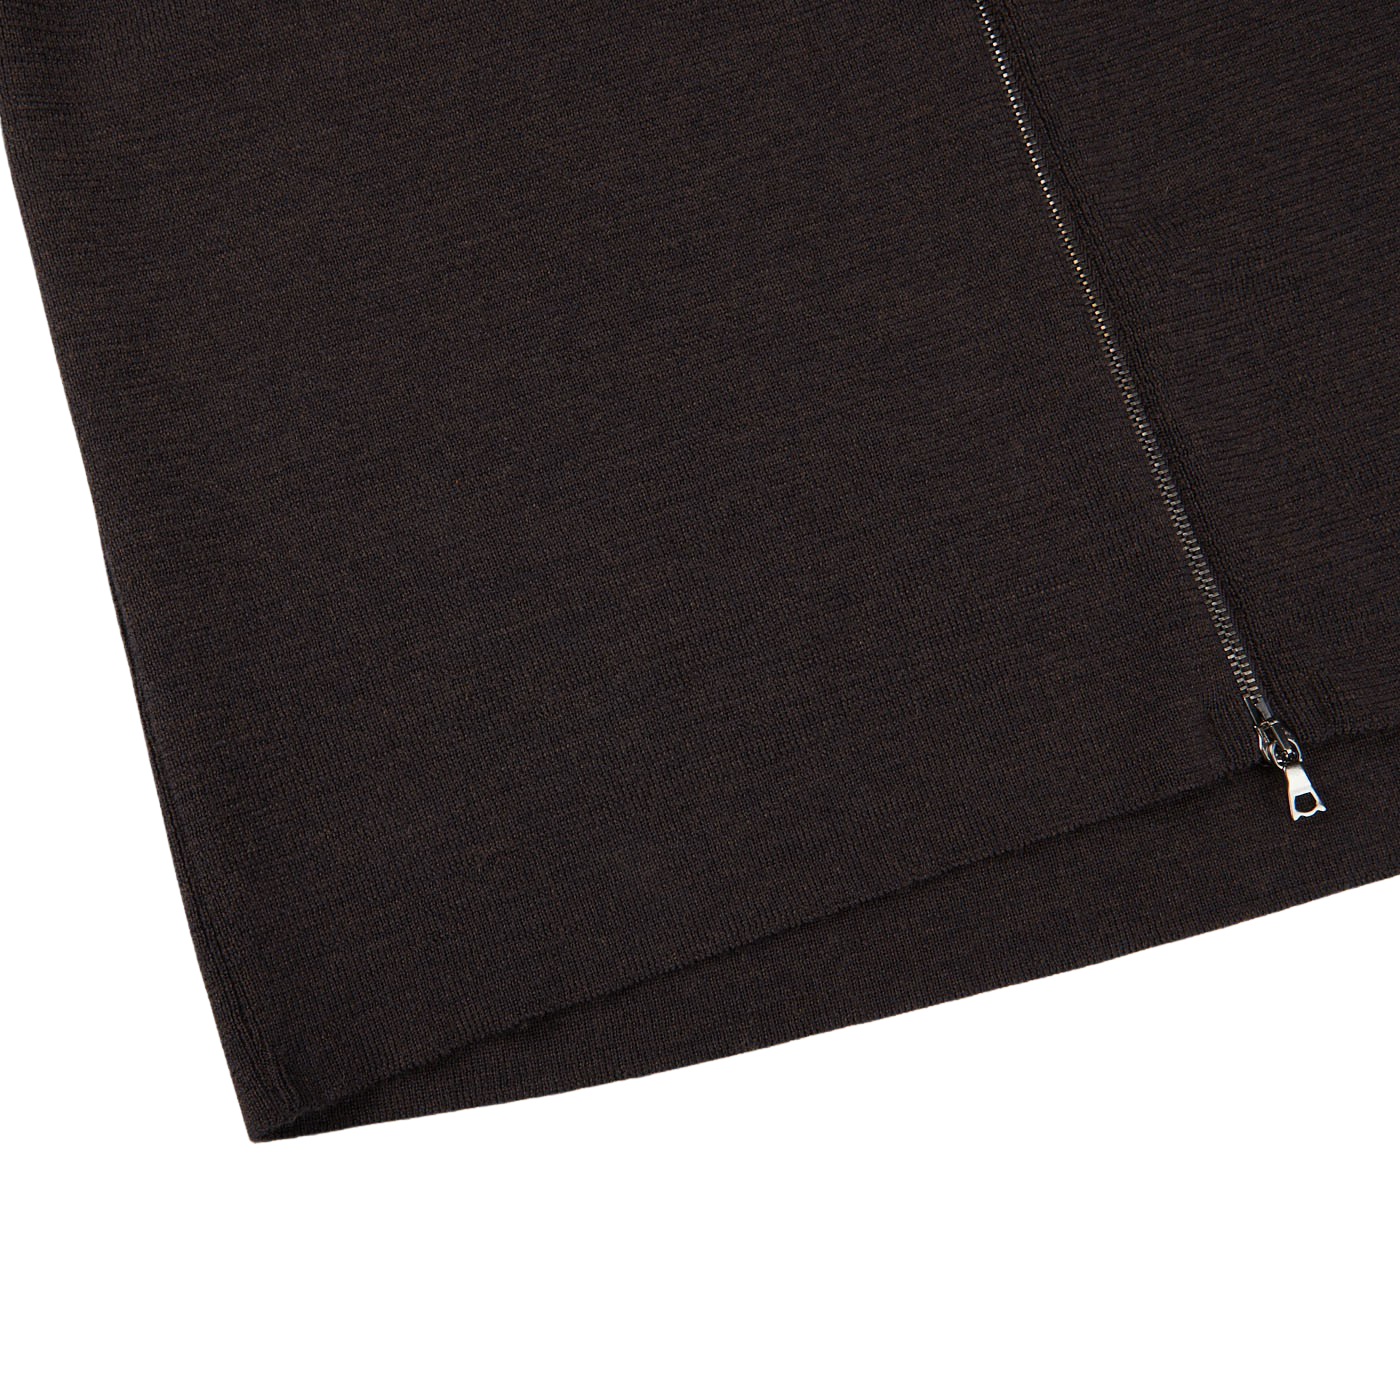 A Brown Melange Merino Wool Zip Jacket with a side zipper by G.R.P.